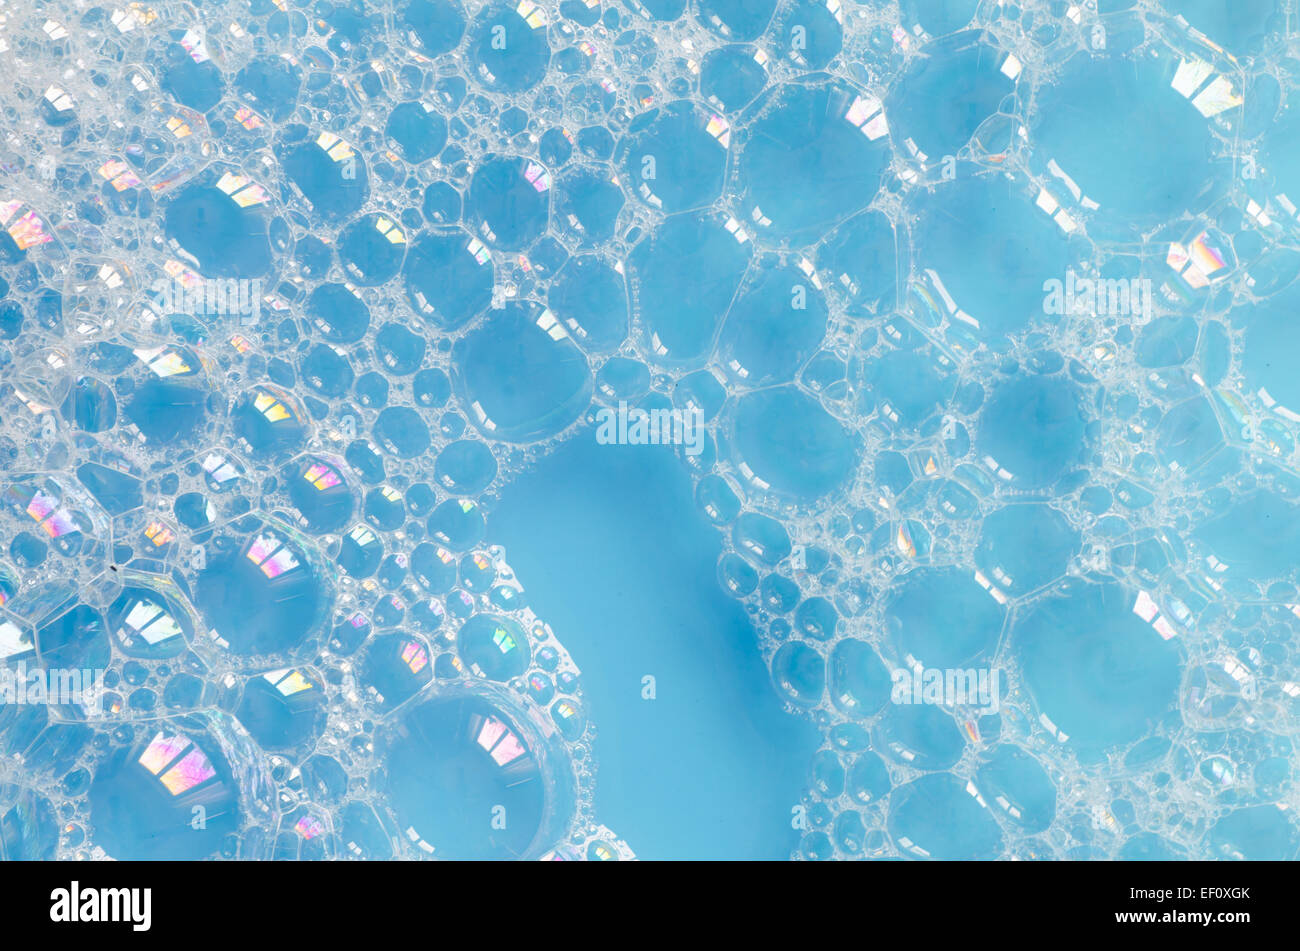 foam bubbles on blue water background Stock Photo - Alamy